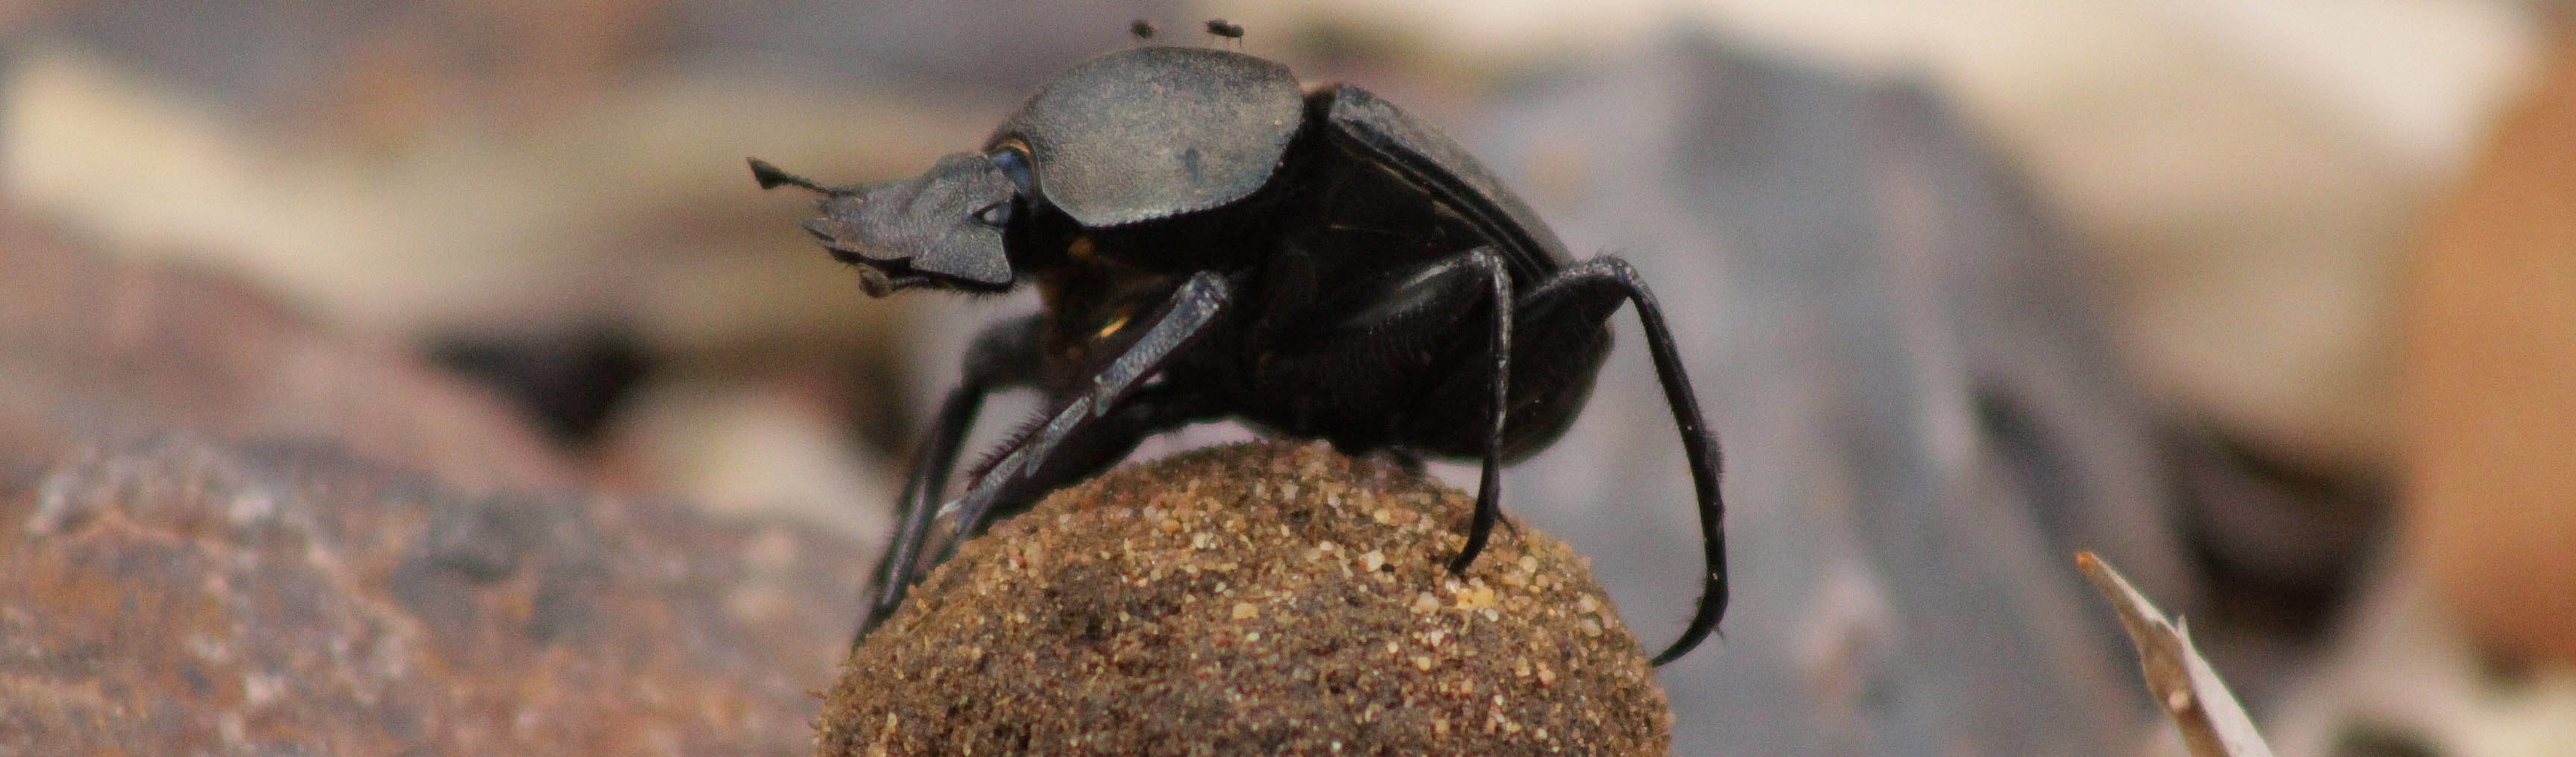 Dung beetle | Wild Planet Safari